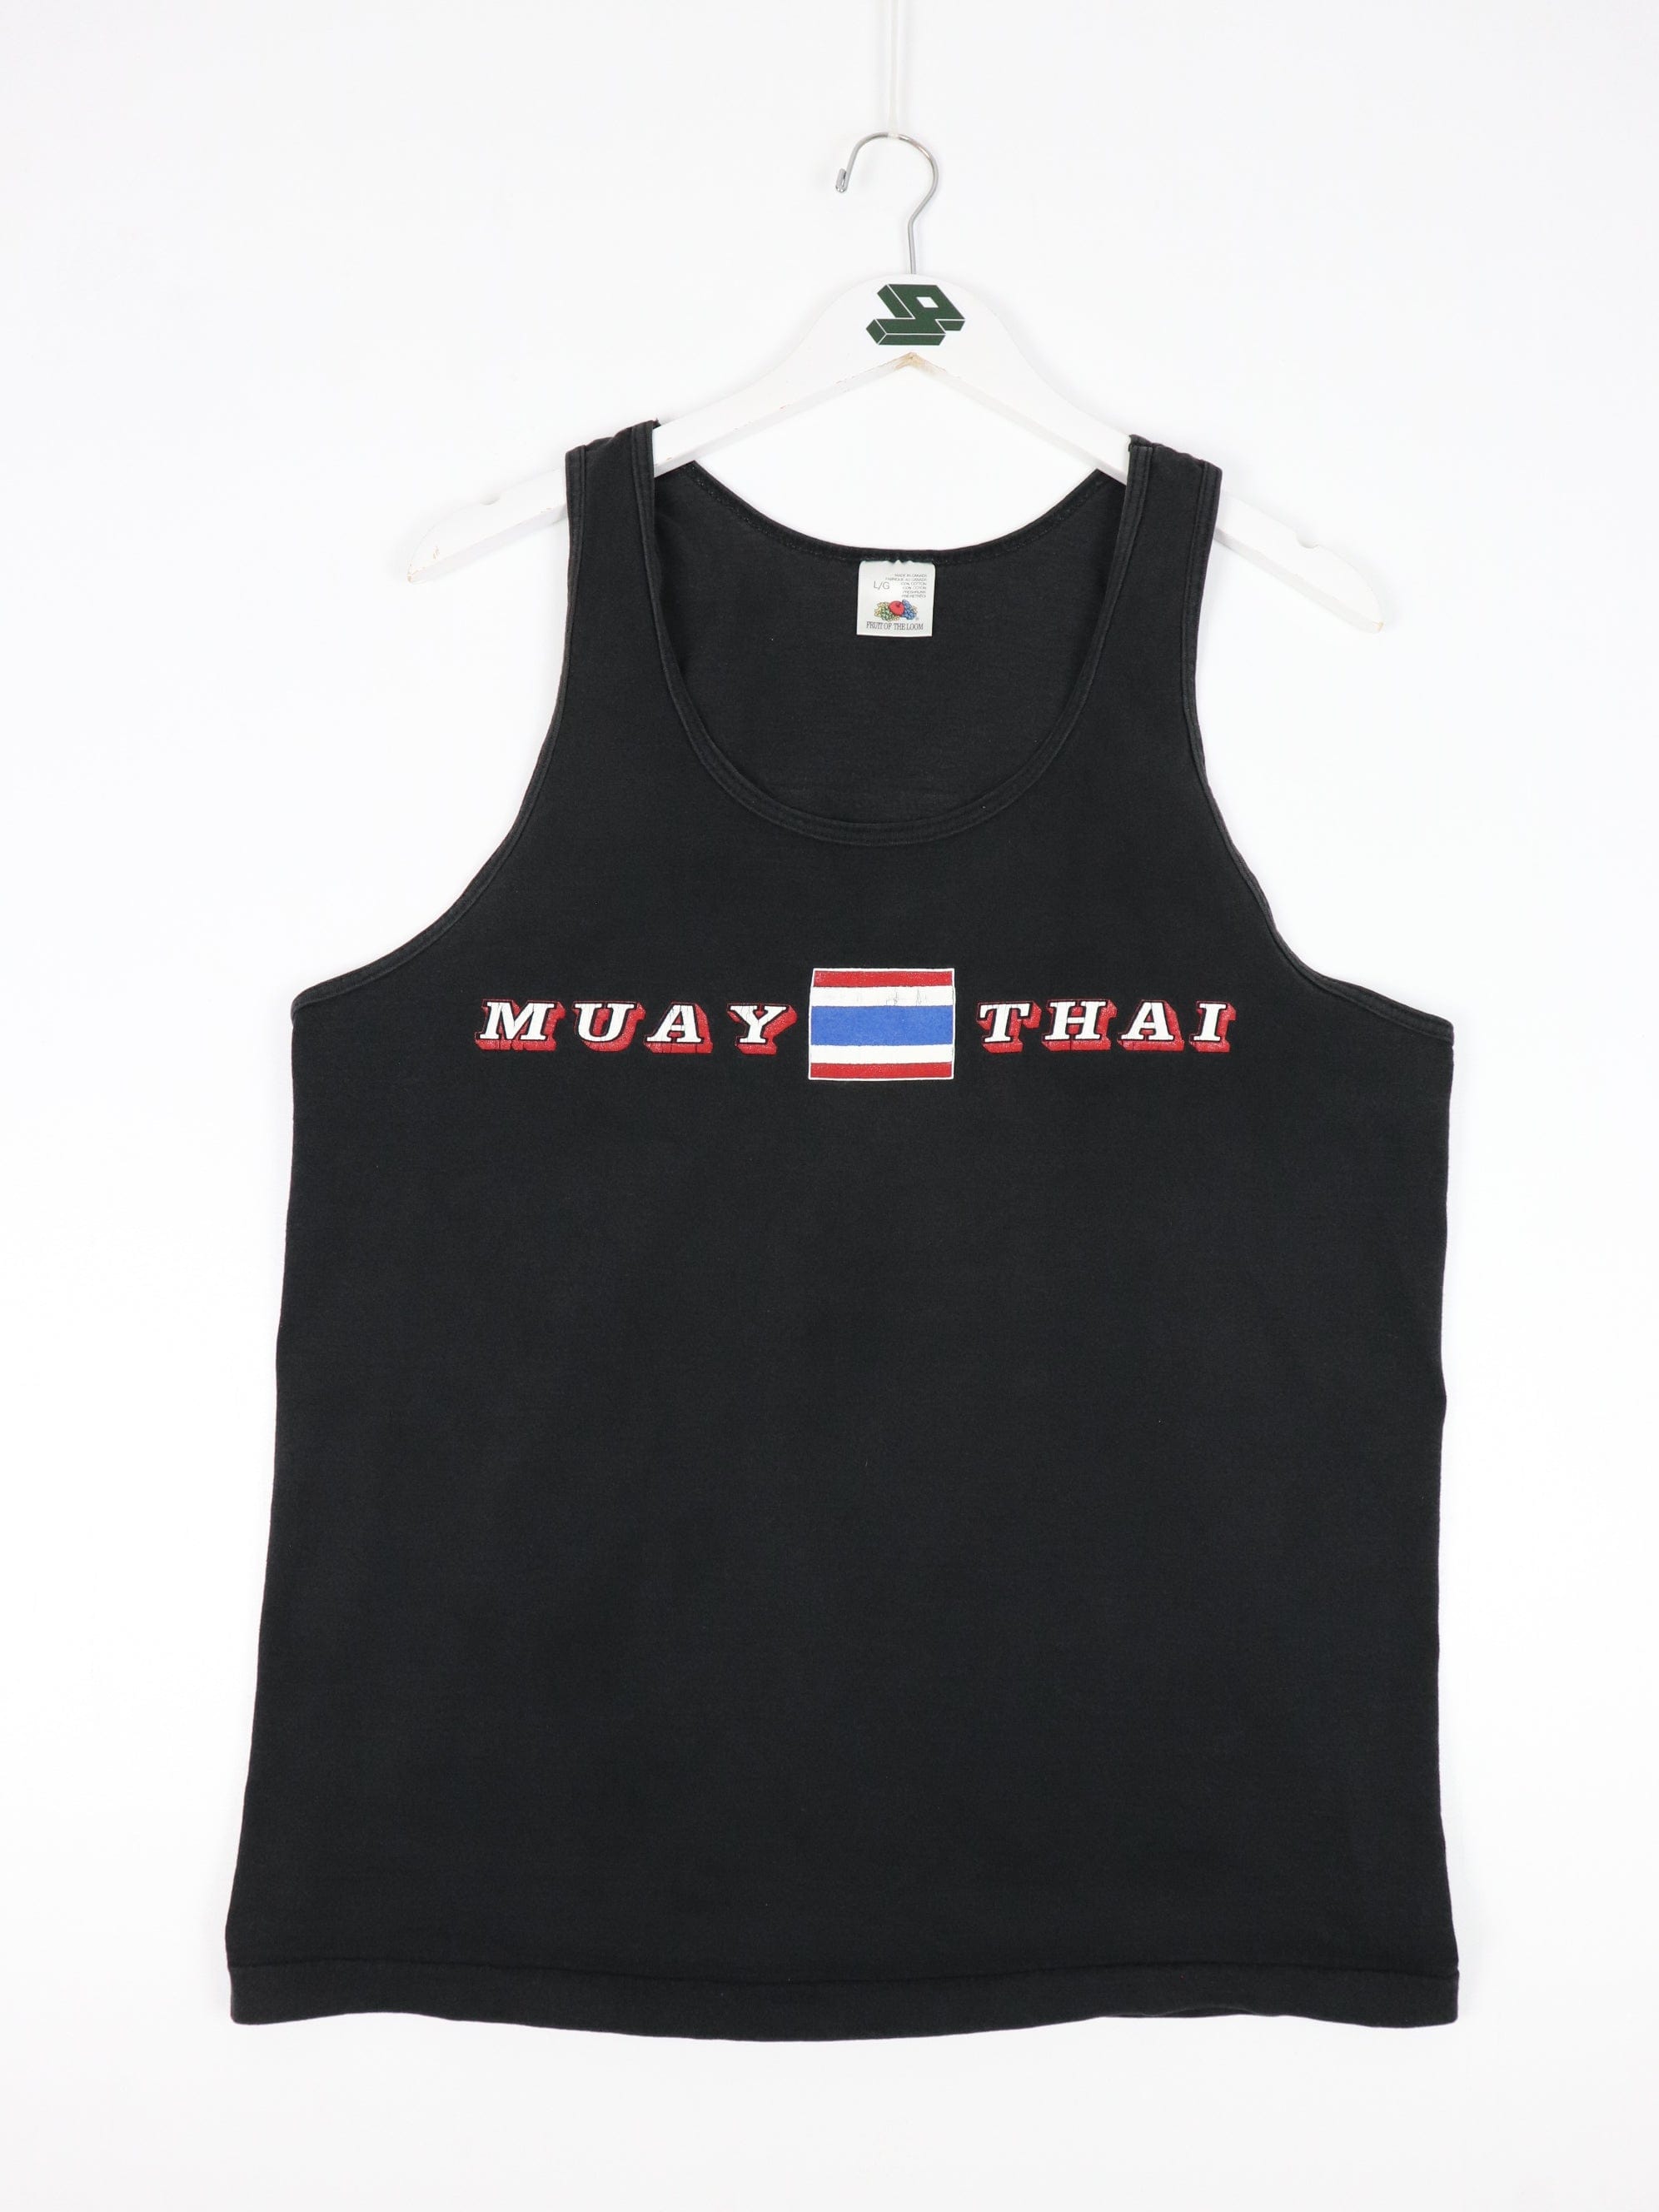 Vintage Muay Thai Tank Top Mens Large Black Martial Arts 90s